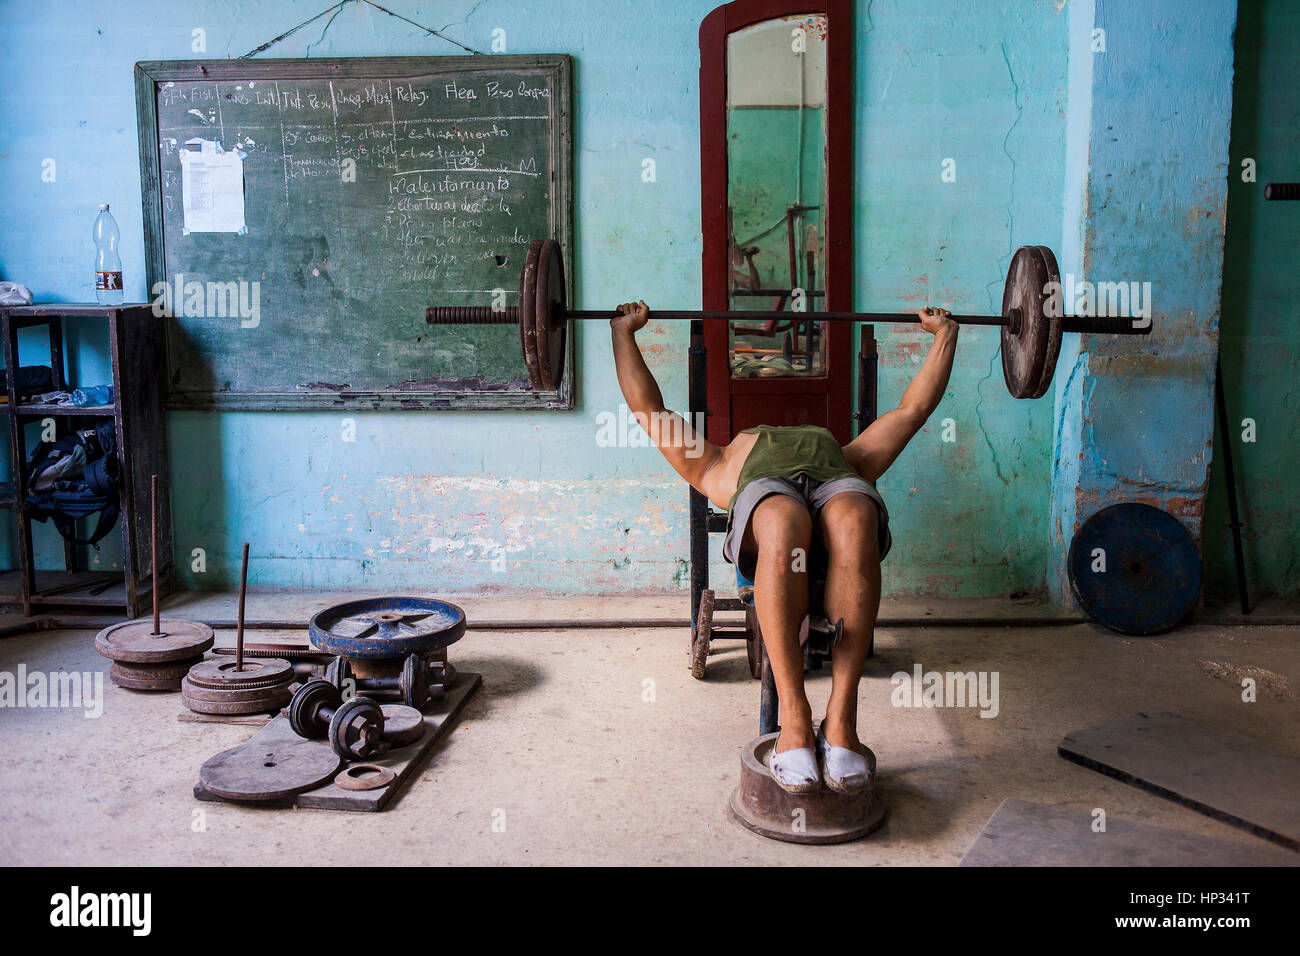 Body builder, muscleman,A Cuban man does exercise at a bodybuilding gym, in San Rafael street, Centro Habana, La Habana, Cuba Stock Photo